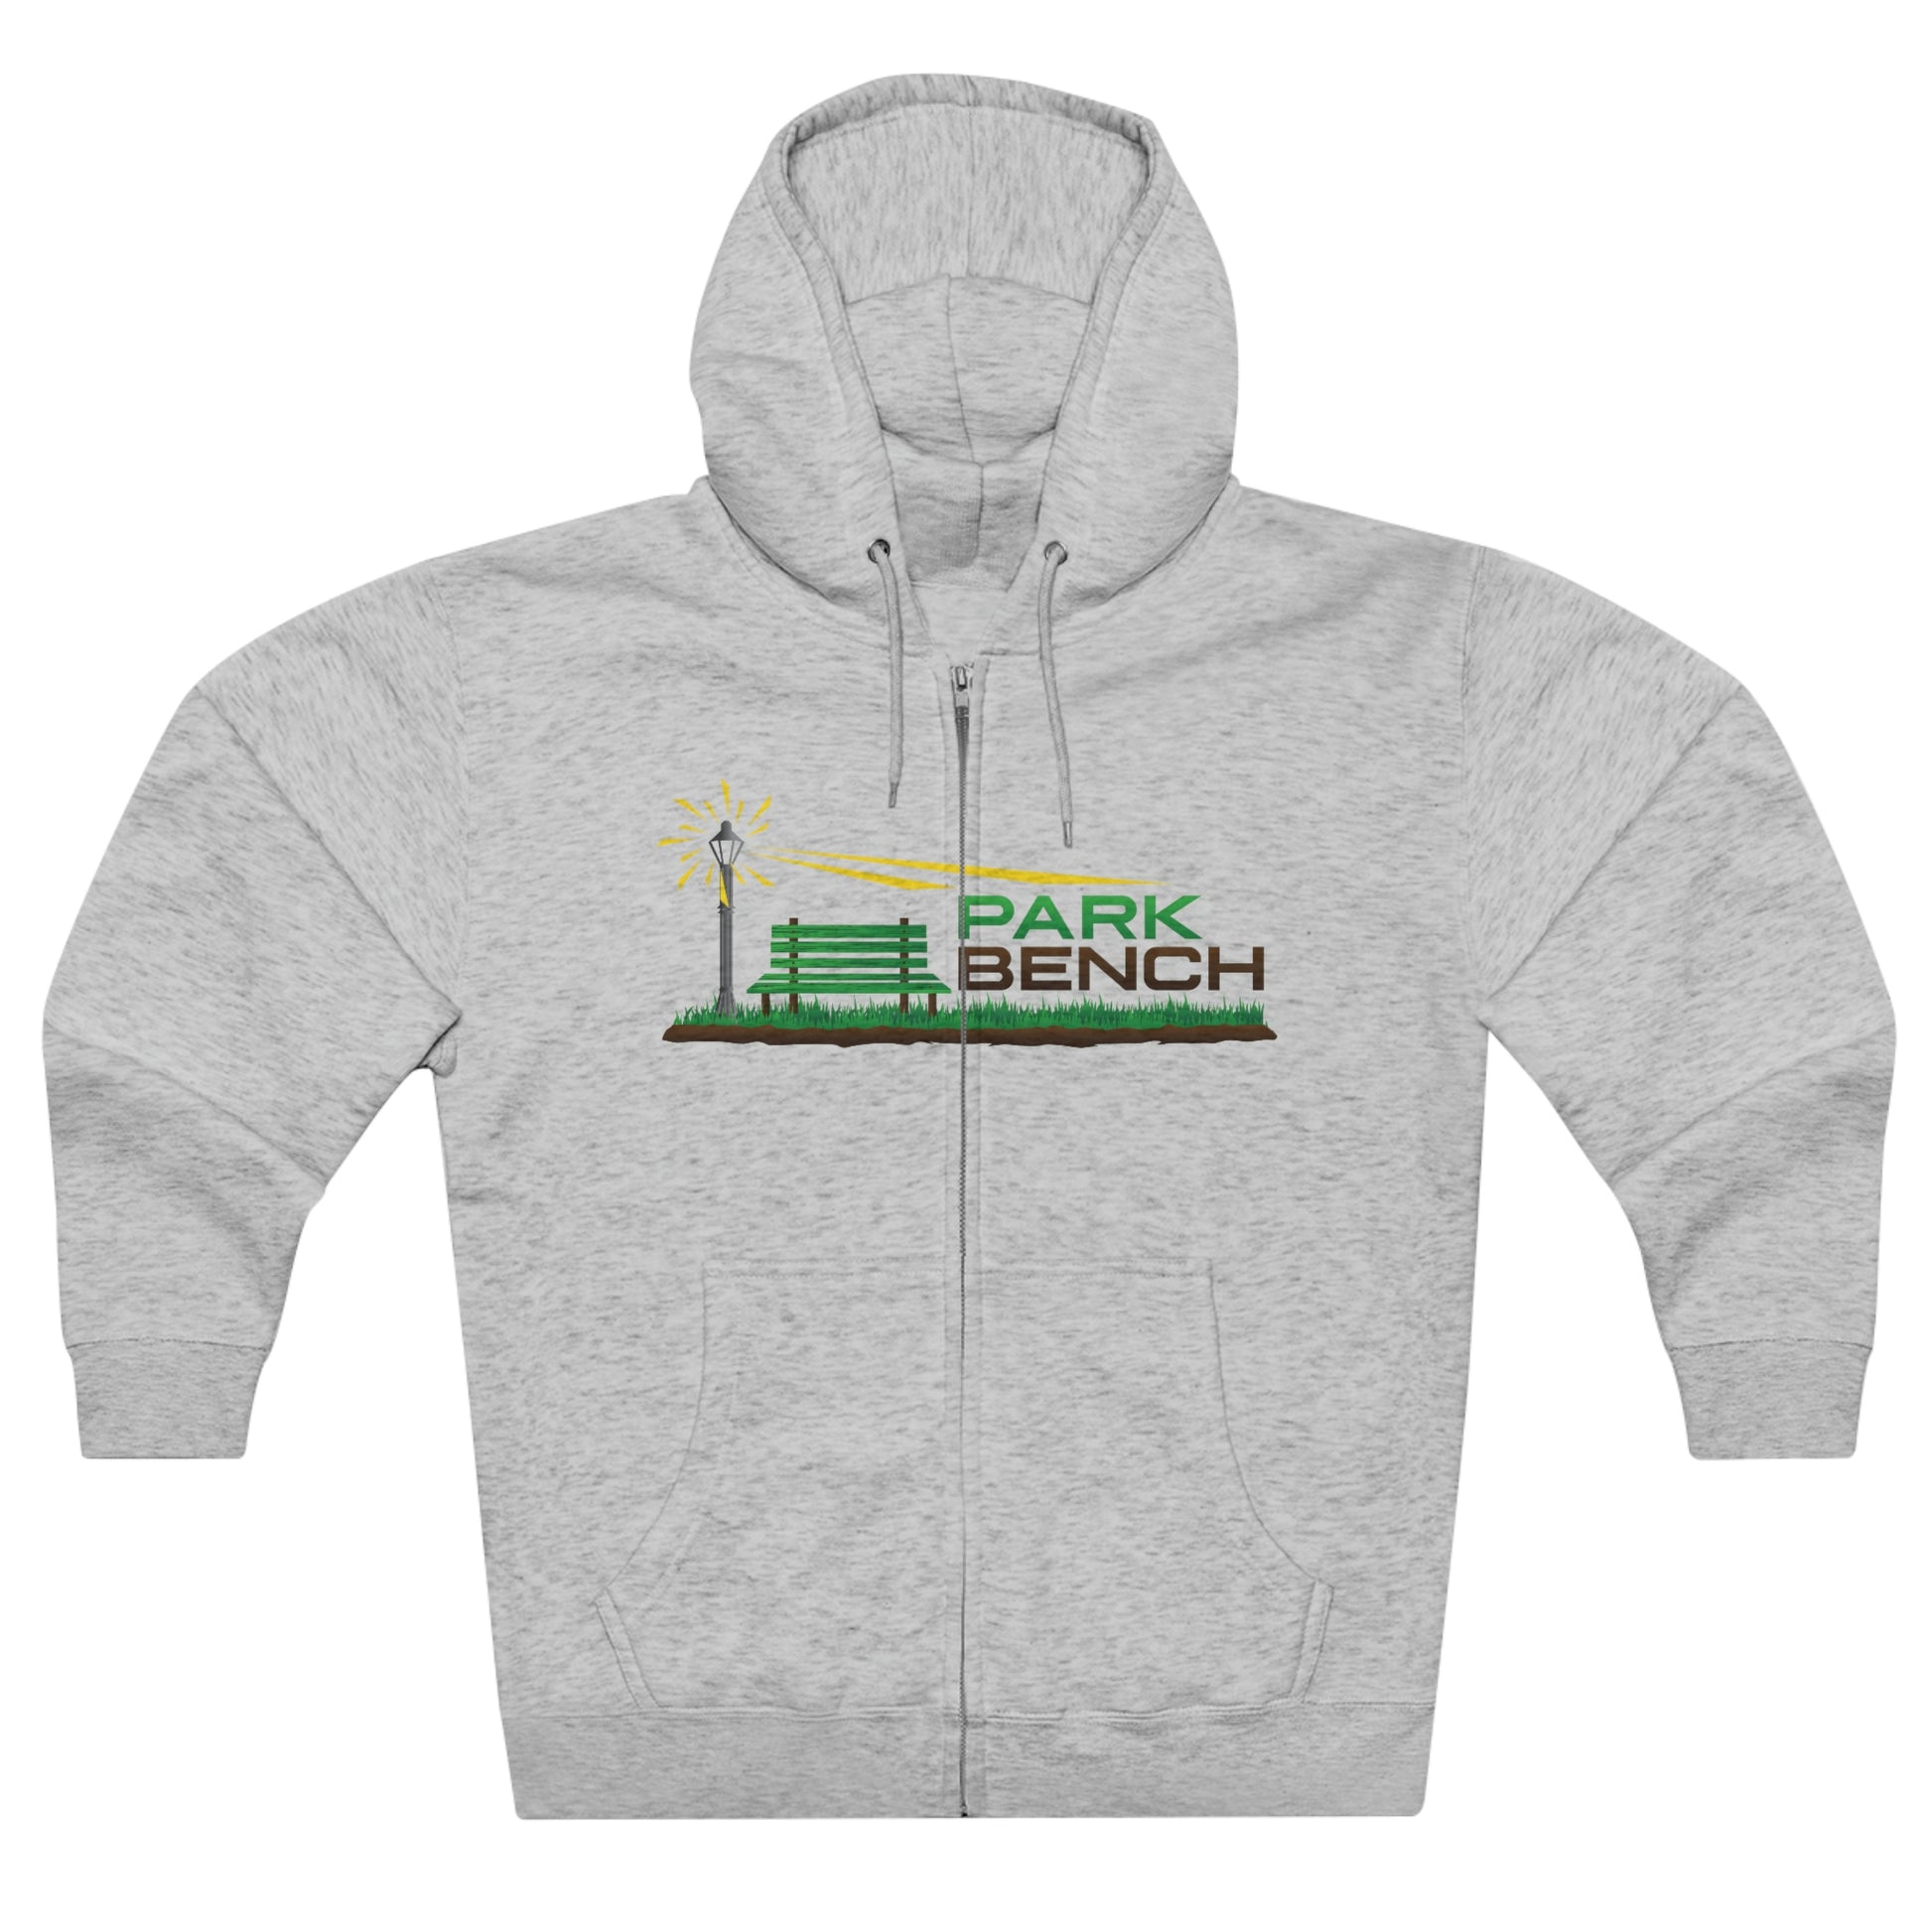 Zip – Bench Park Premium Rich Hoodie Clothing